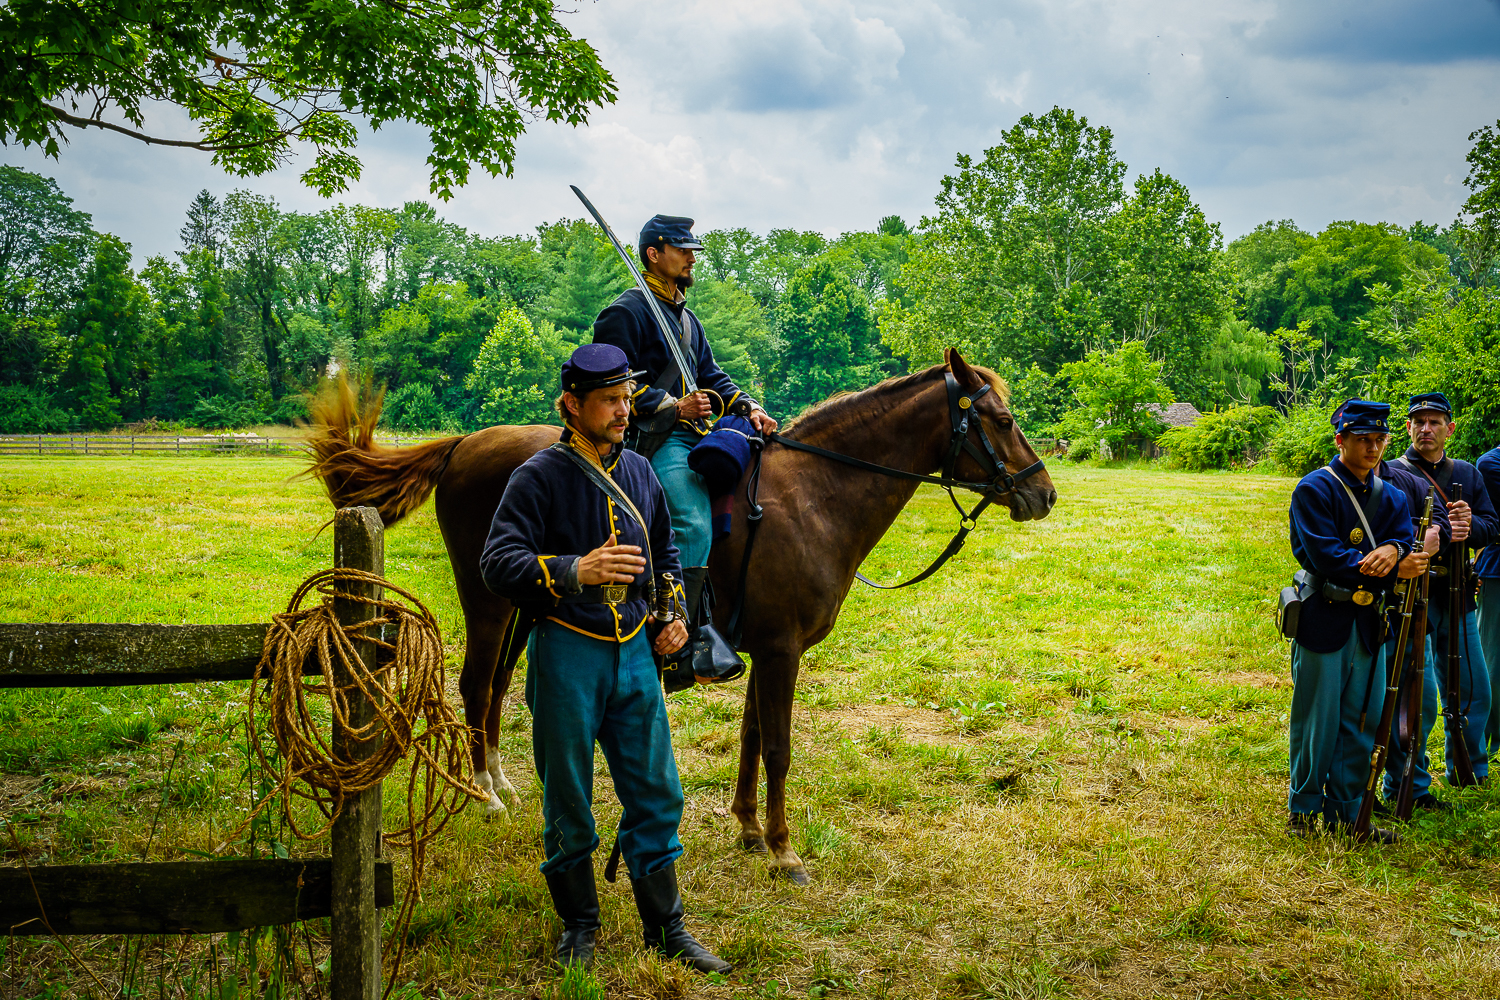 Union Cavalry Photo by George Sheldon